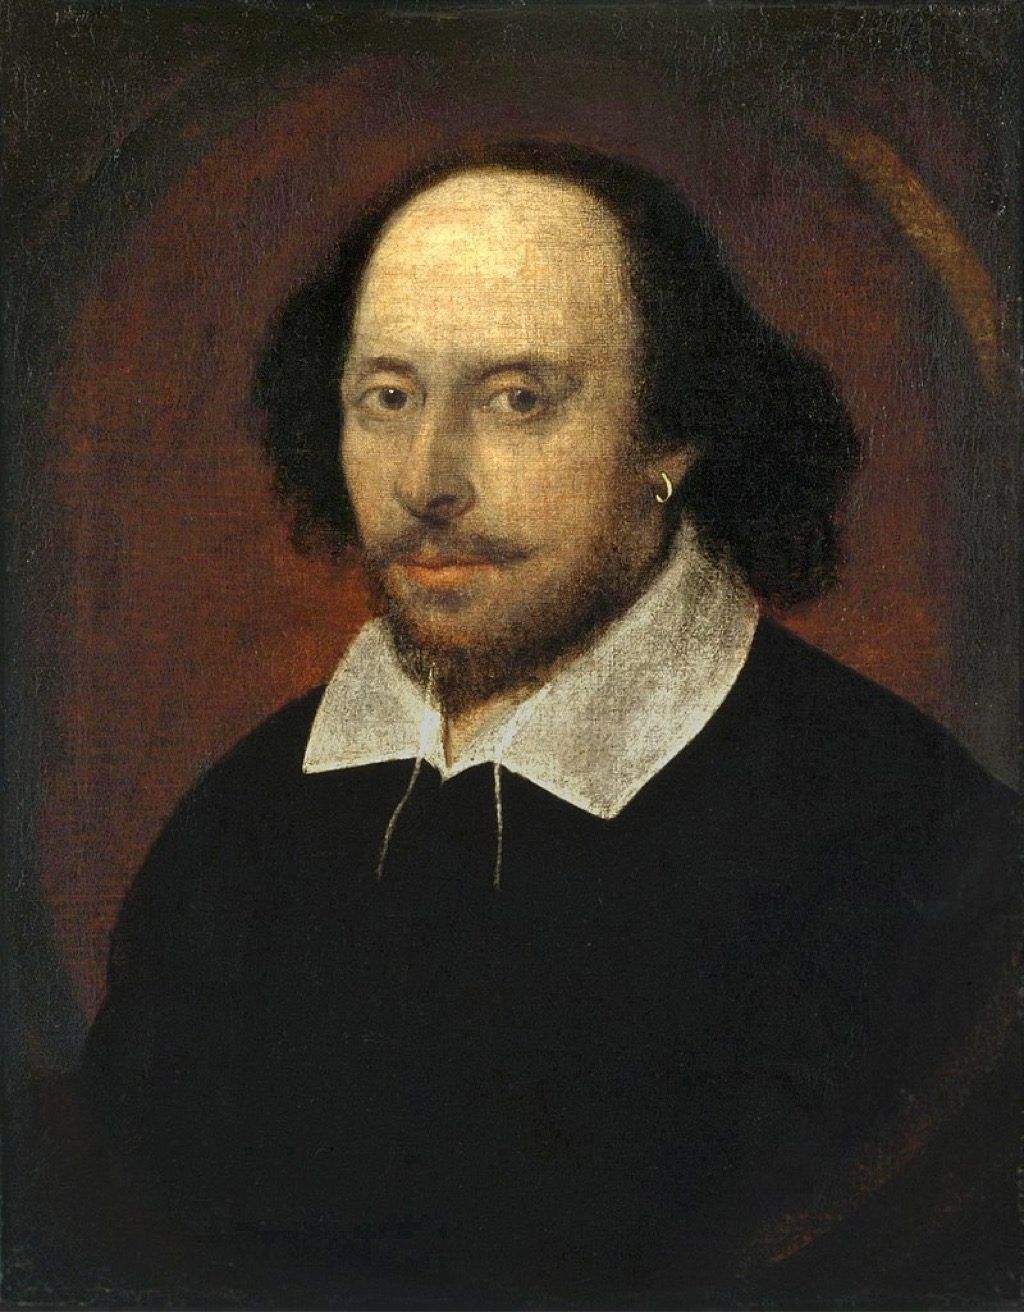 Shakespeare Faktid elust